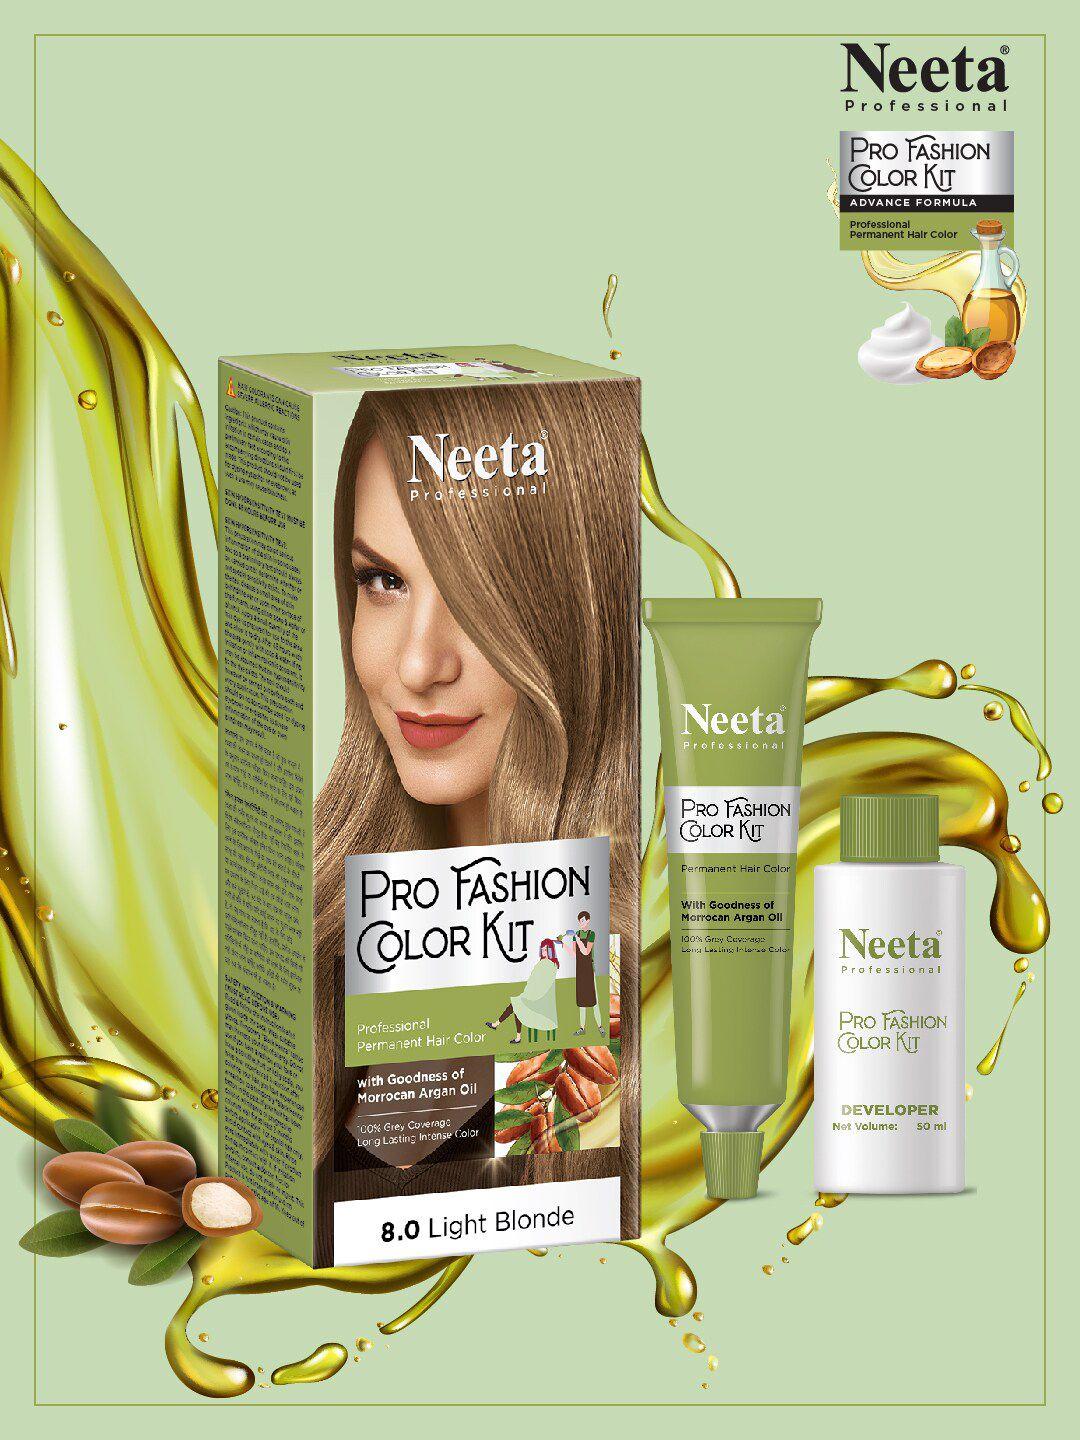 neeta professional pro fashion permanent hair color kit 100g - light blonde 8.0